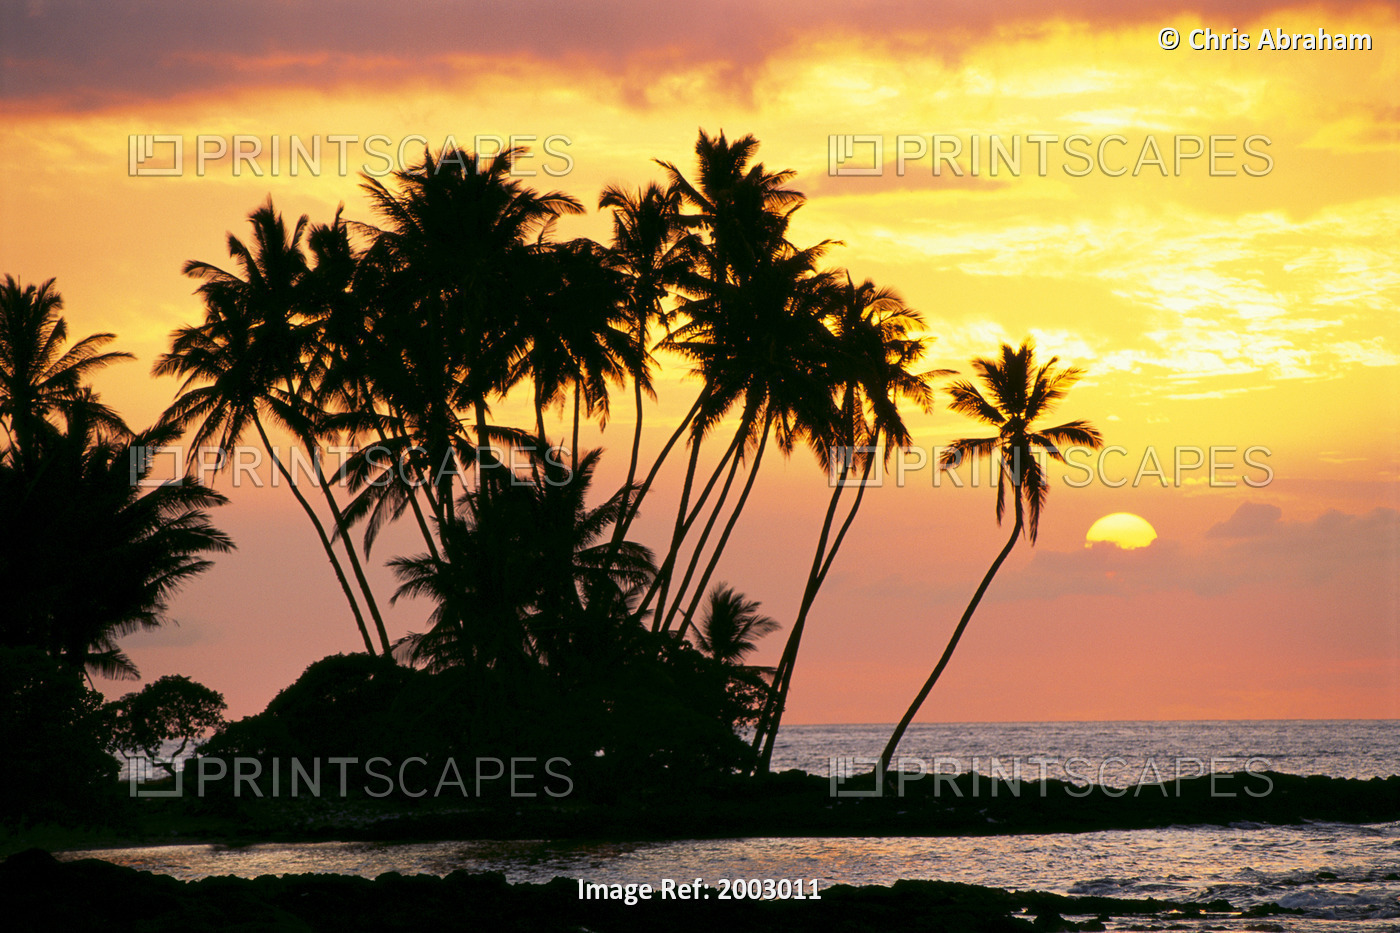 Hawaii, Big Island, Wailua Bay, View Of Palm Trees At Sunset, Calm Ocean Waters